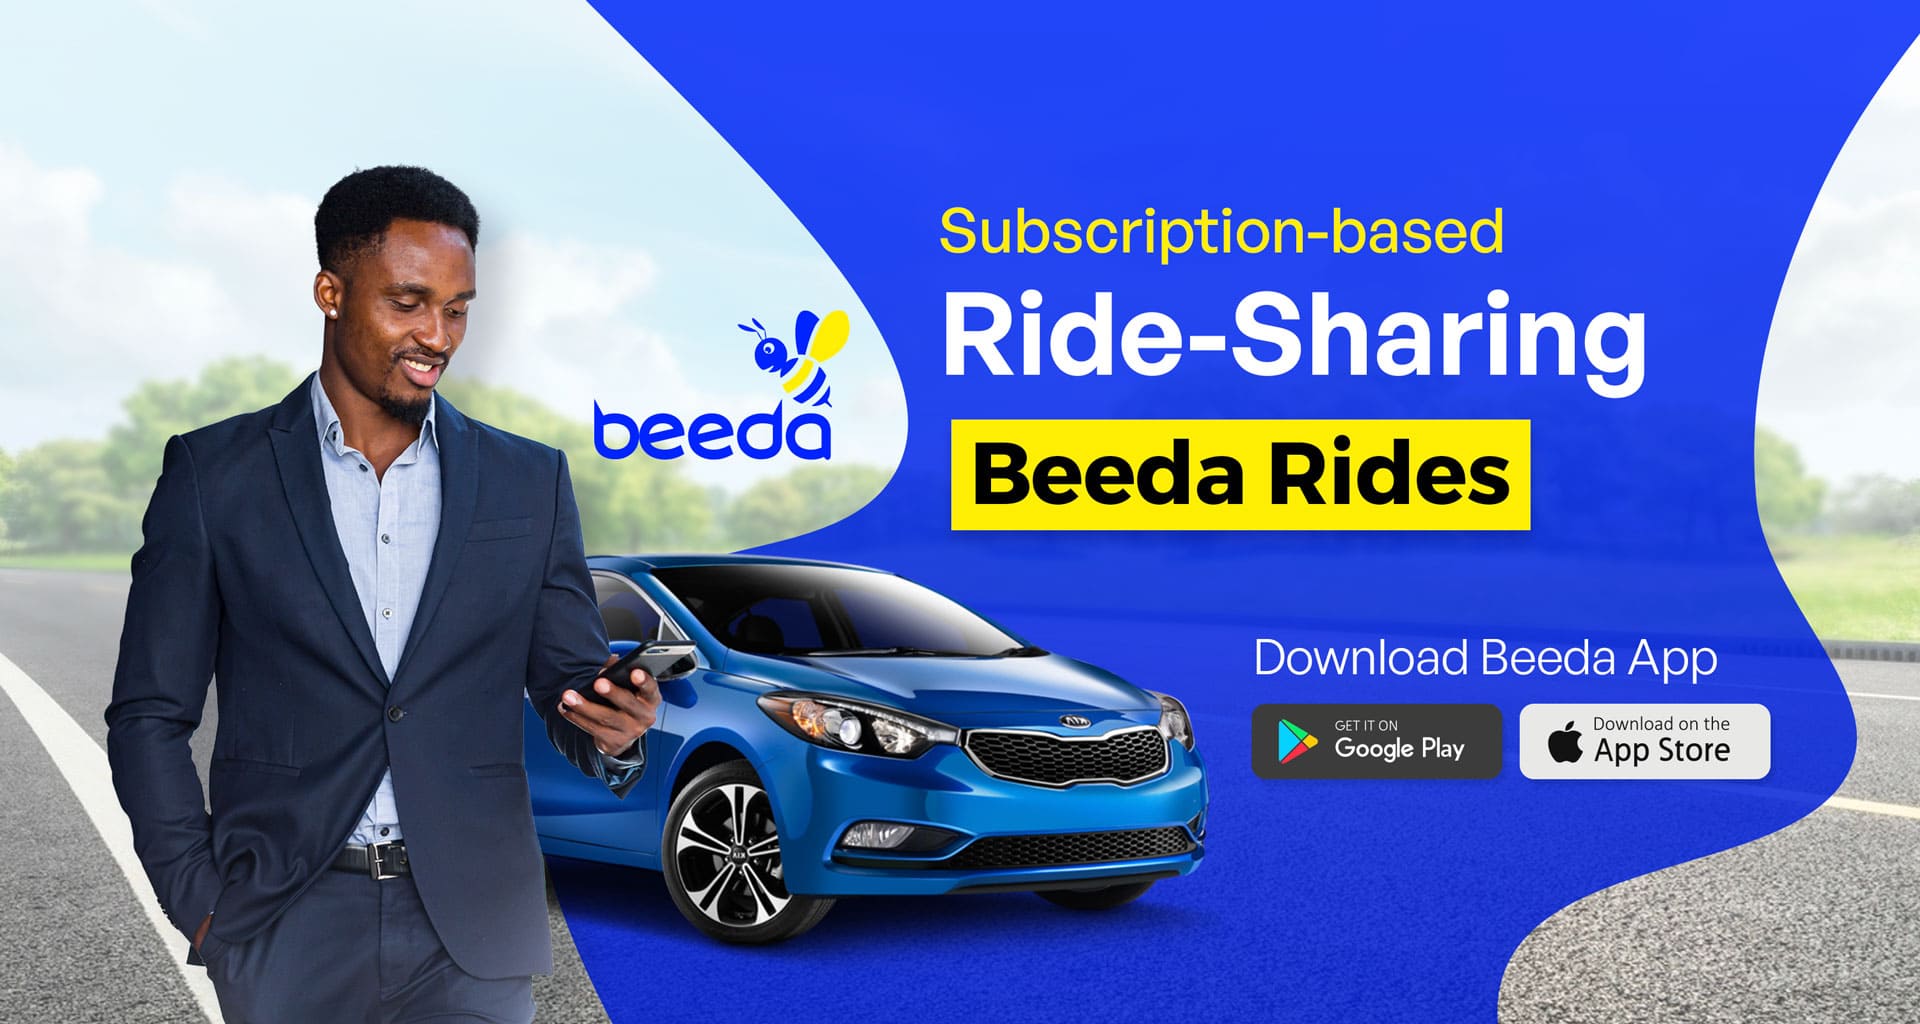 Subscription-based Ride-Sharing Platform: Beeda Rides